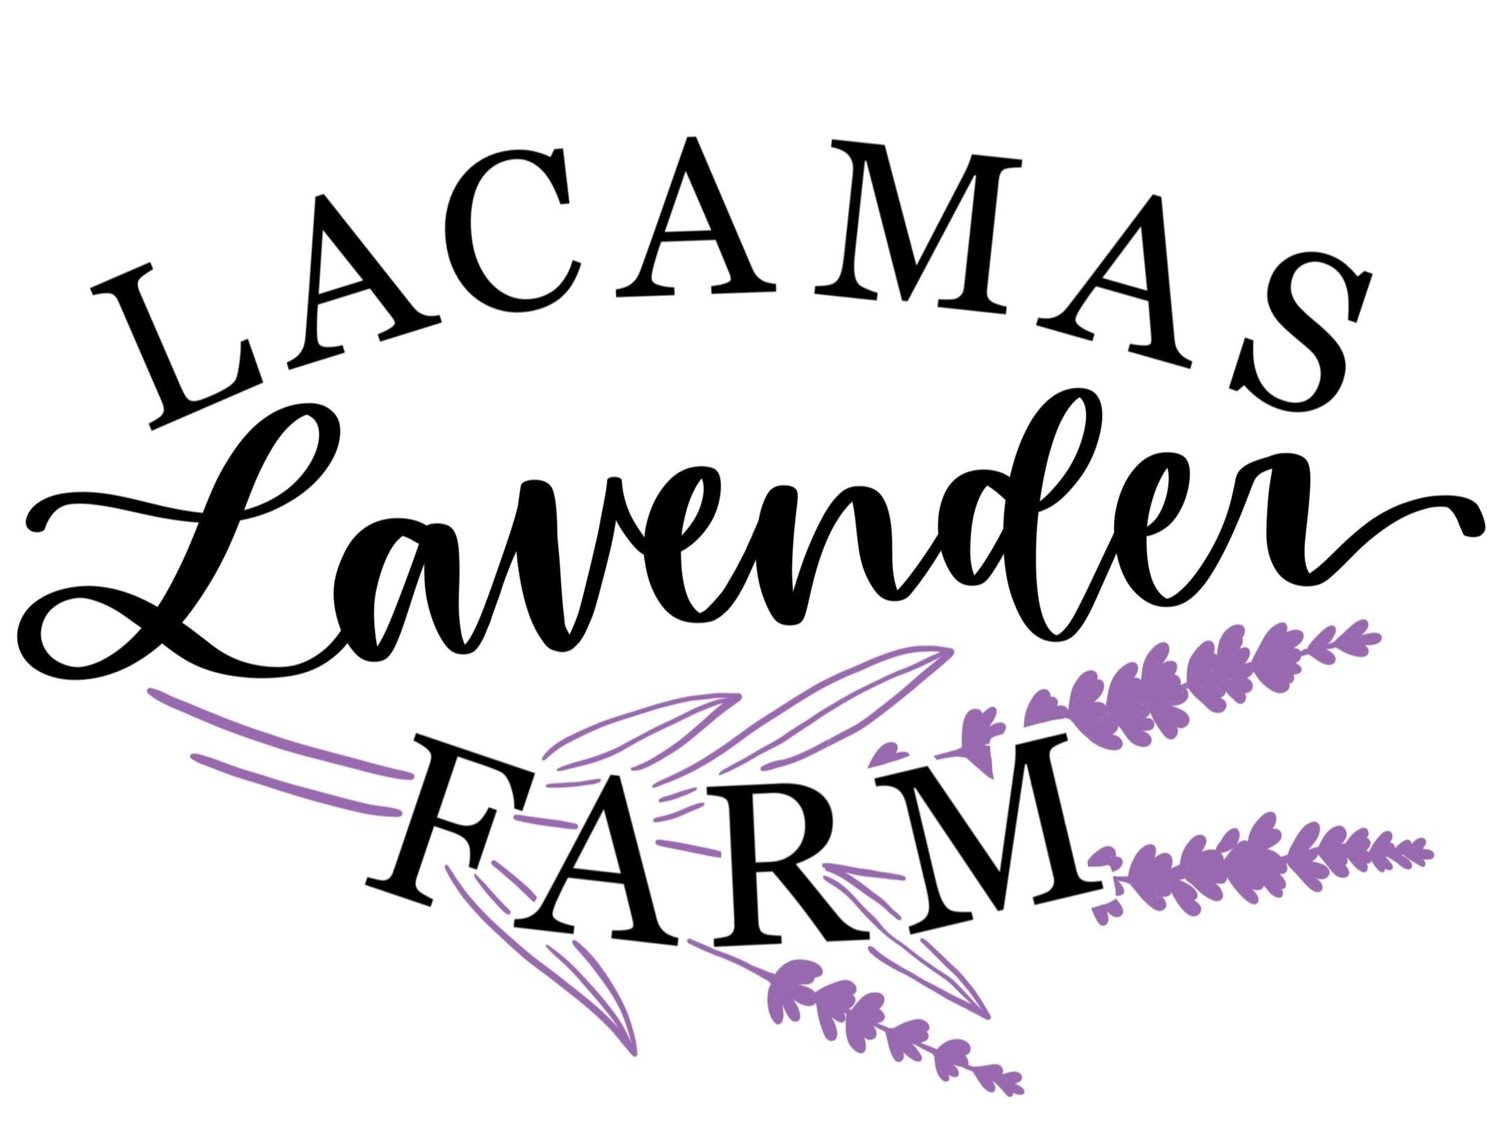 Lacamas Lavender Farm